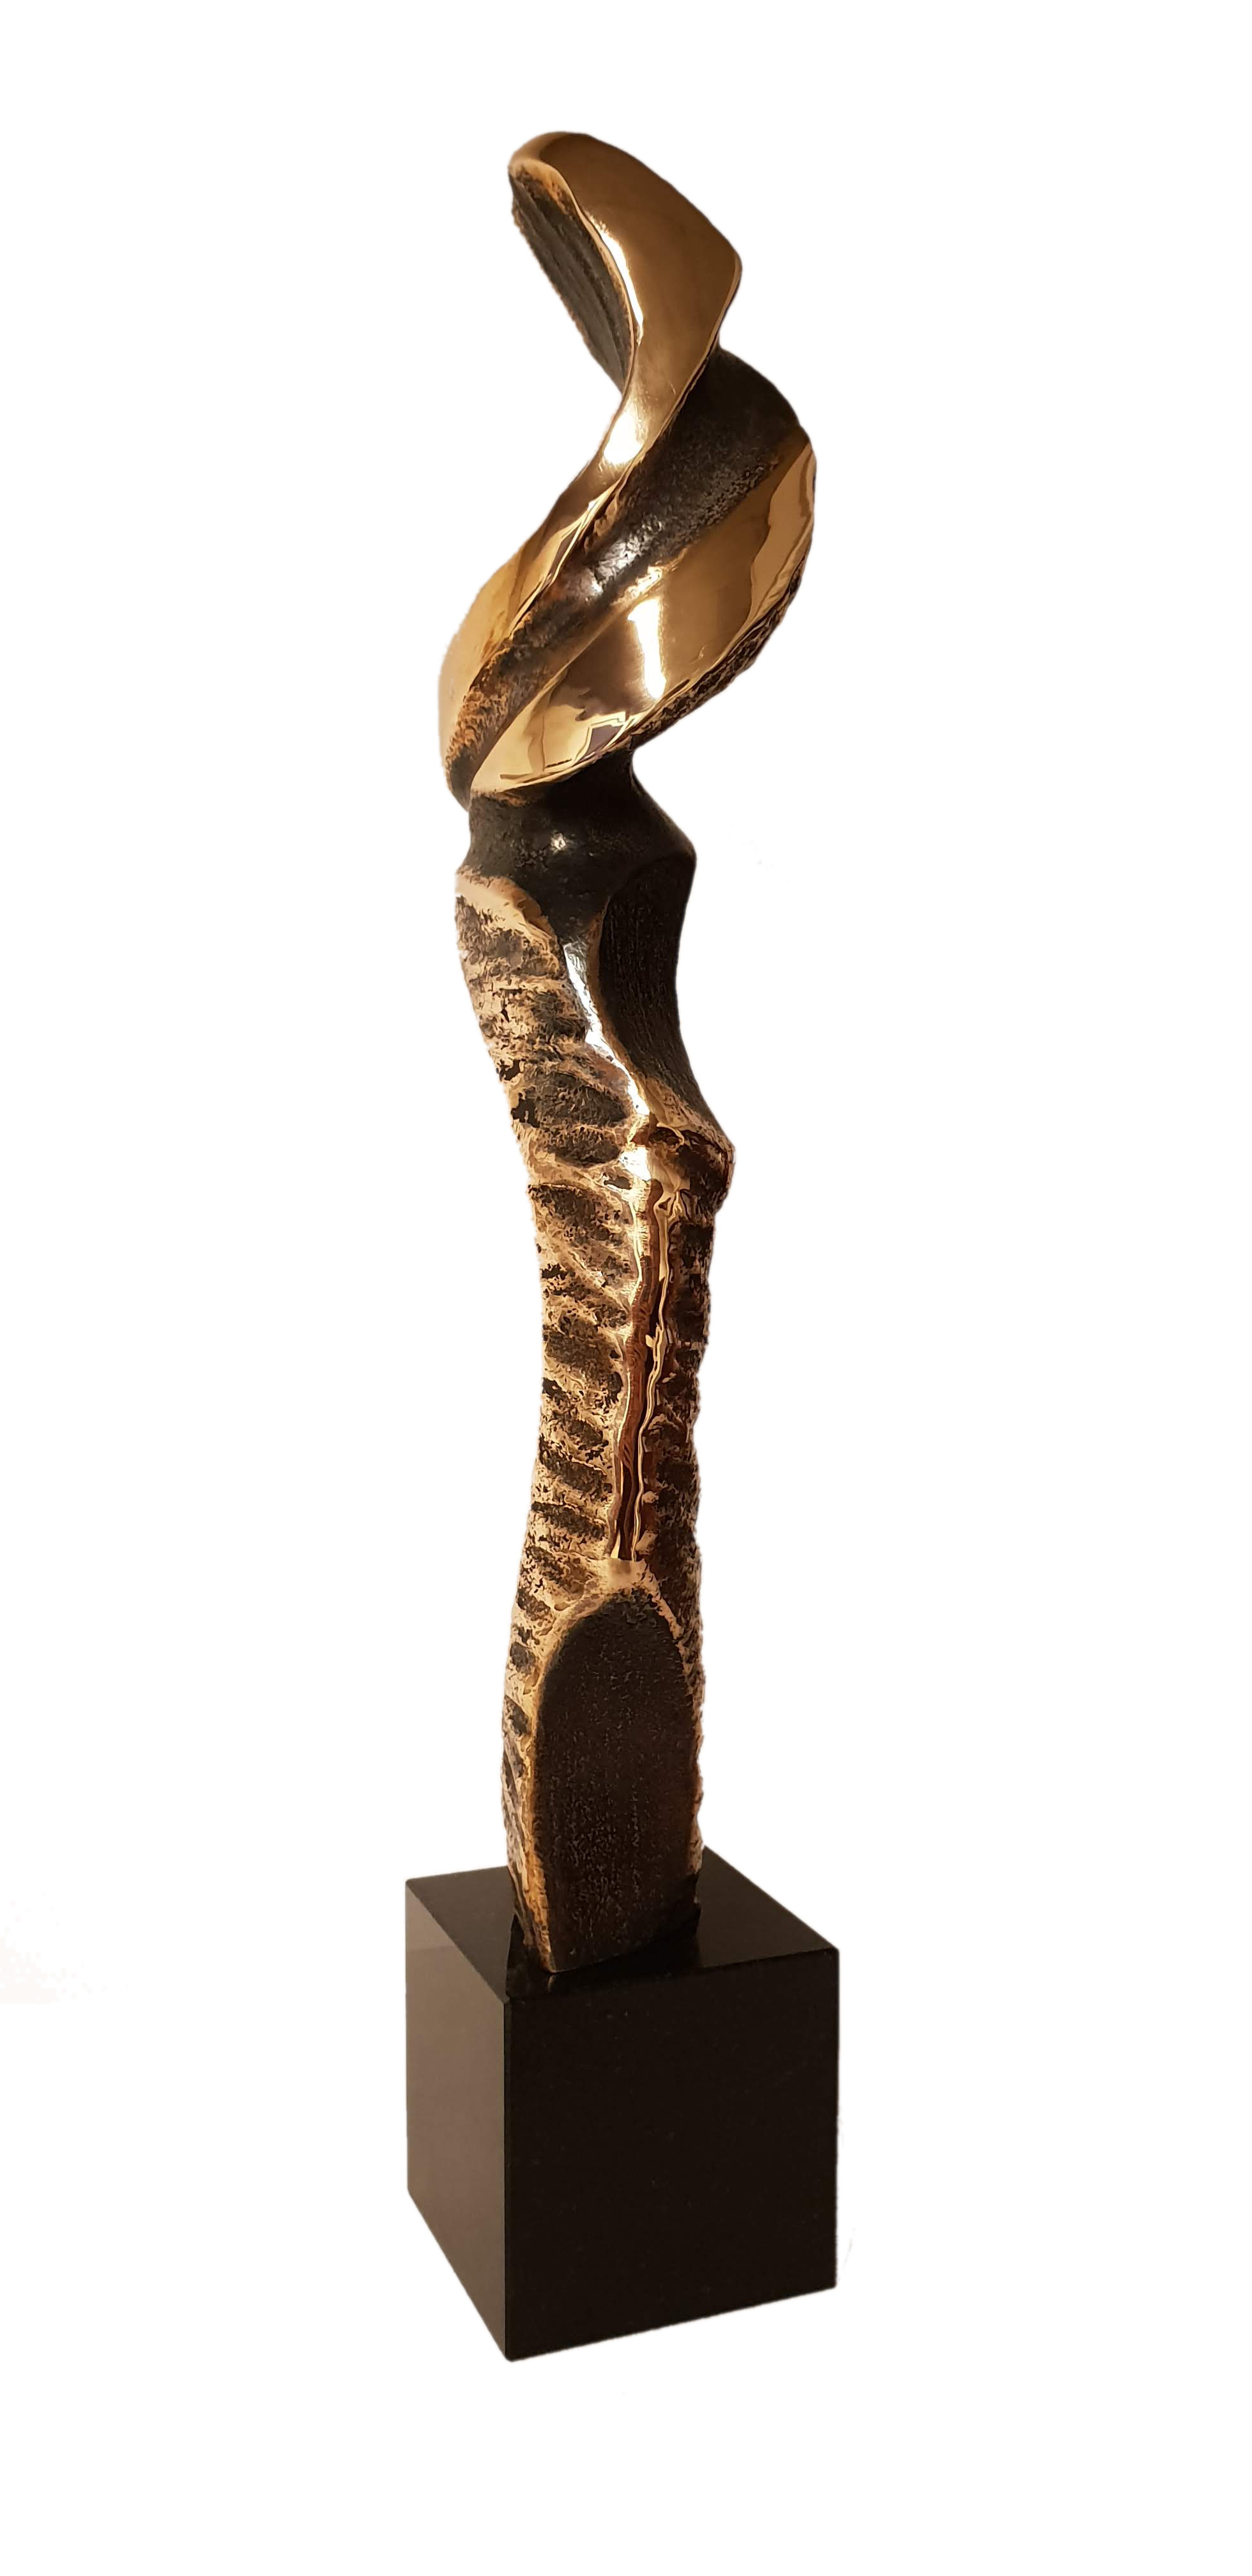 Never Say Never massiv unika bronzeskulptur 43x10cm kr.8.800,-